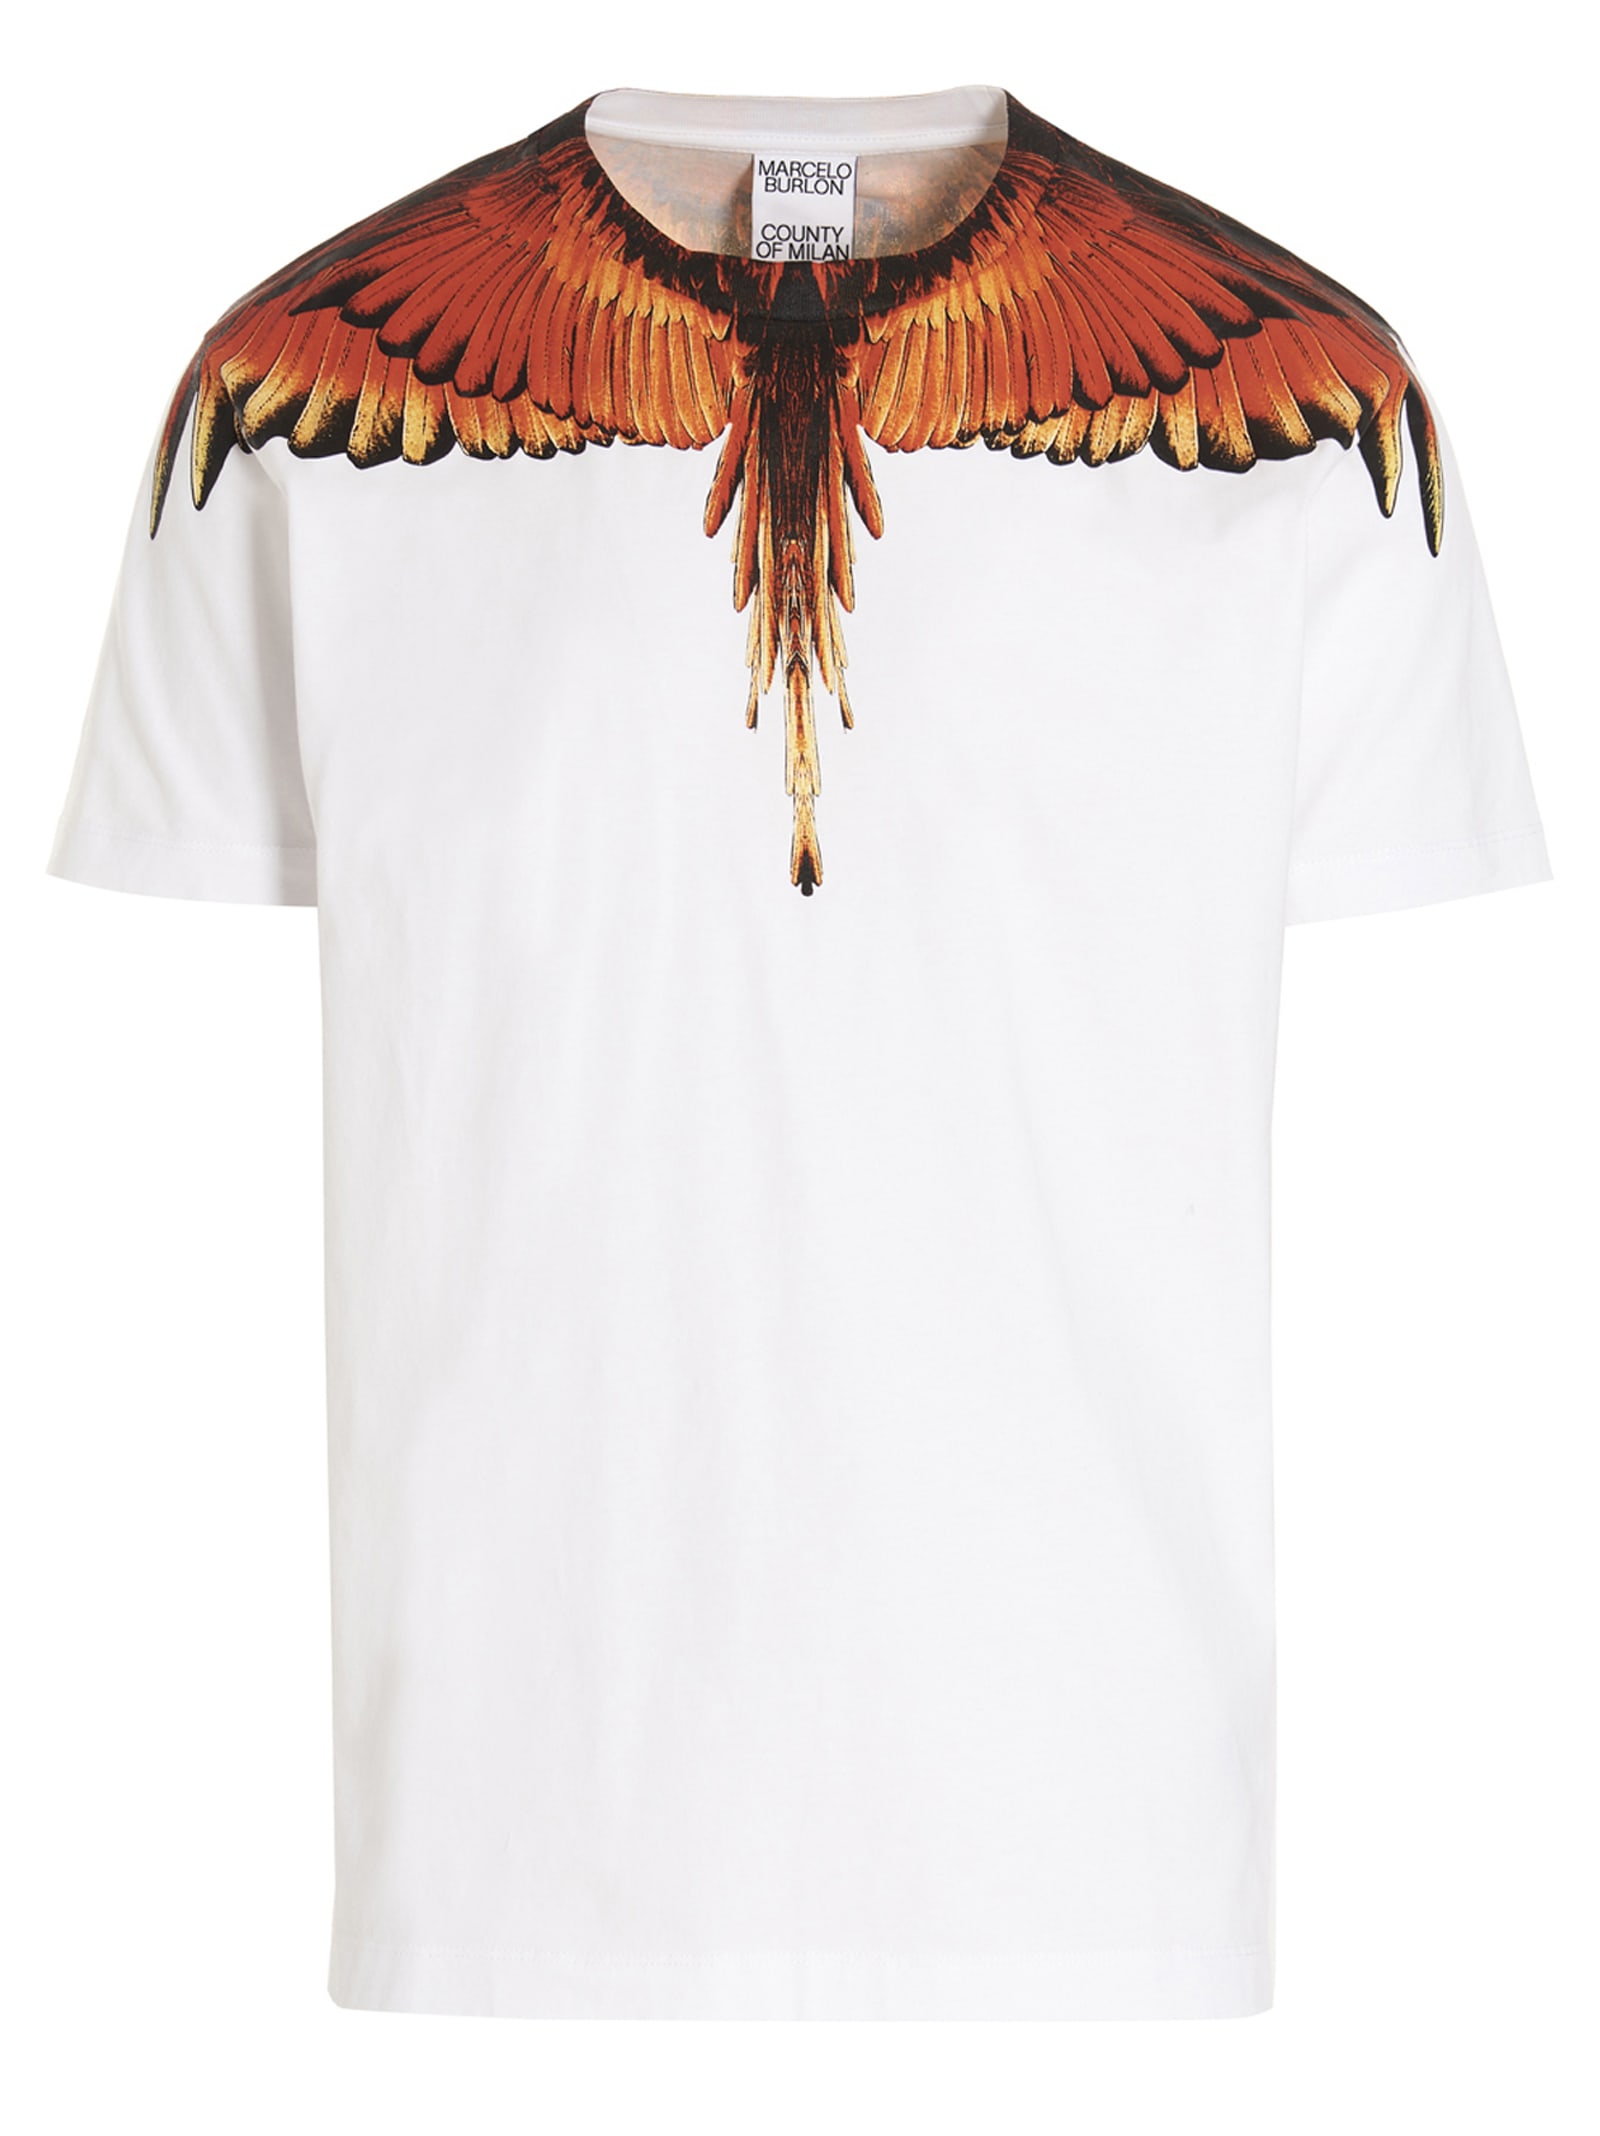 Marcelo Burlon T-shirt icon Wings